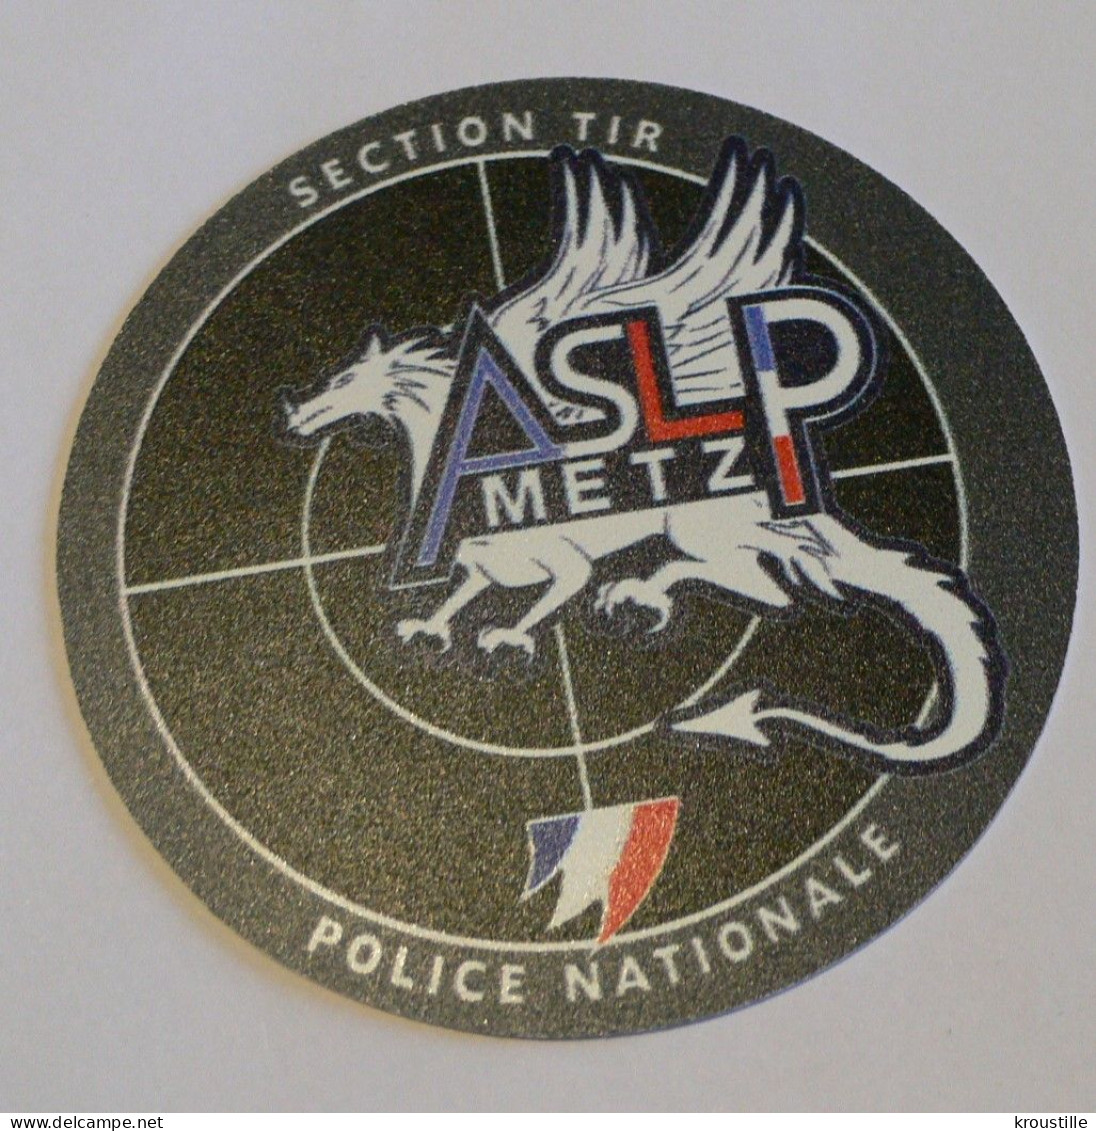 THEME TIR SPORTIF : AUTOCOLLANT ASLP METZ - SECTION TIR POLICE NATIONALE - Pegatinas